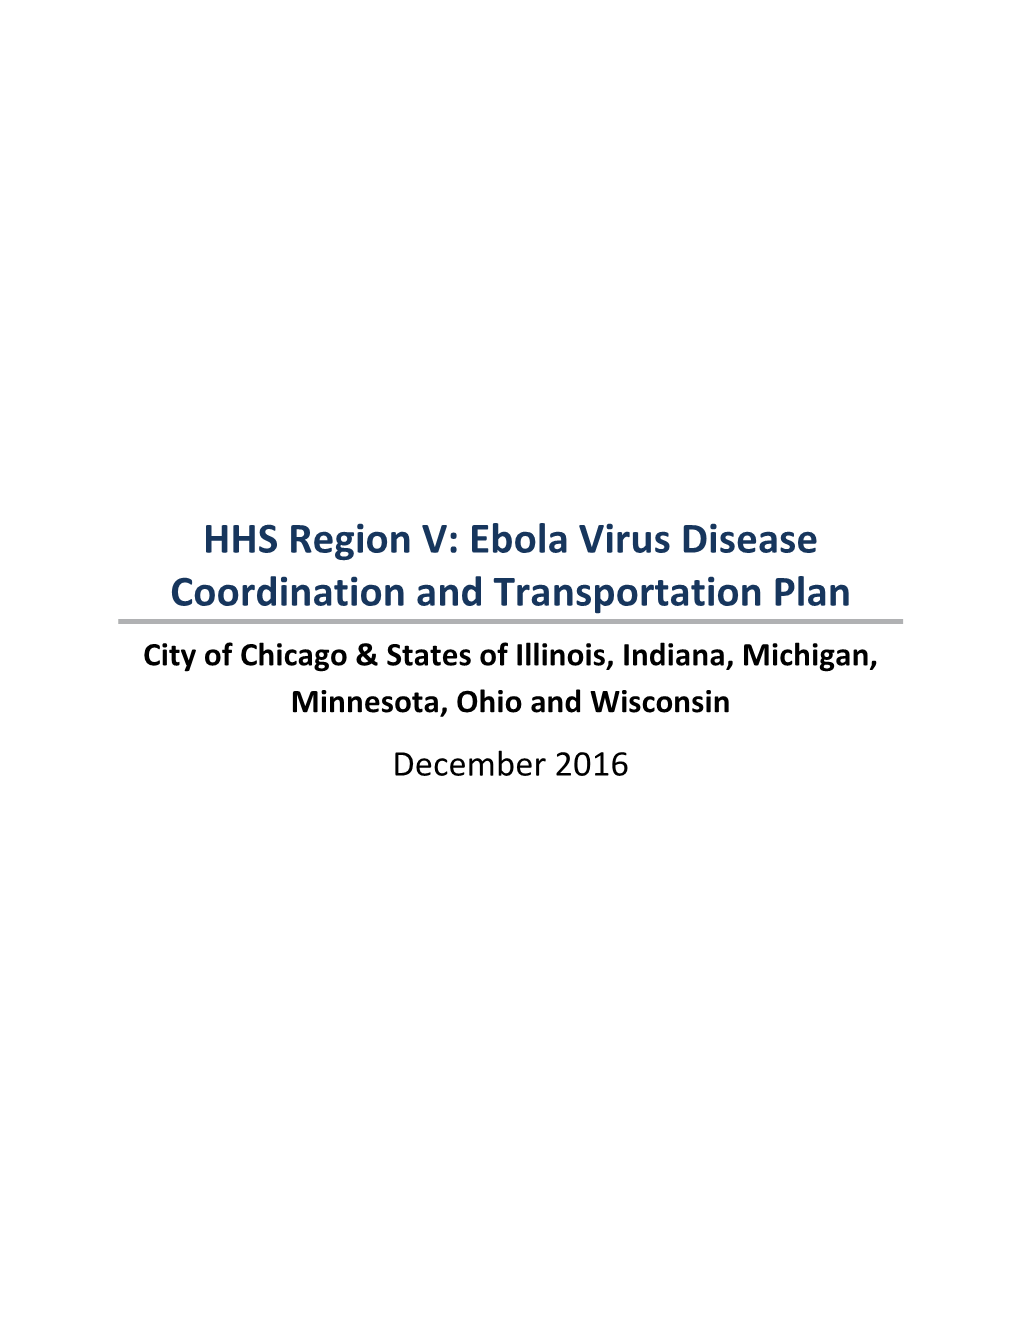 Ebola Virus Disease Coordination and Transportation Plan City of Chicago & States of Illinois, Indiana, Michigan, Minnesota, Ohio and Wisconsin December 2016